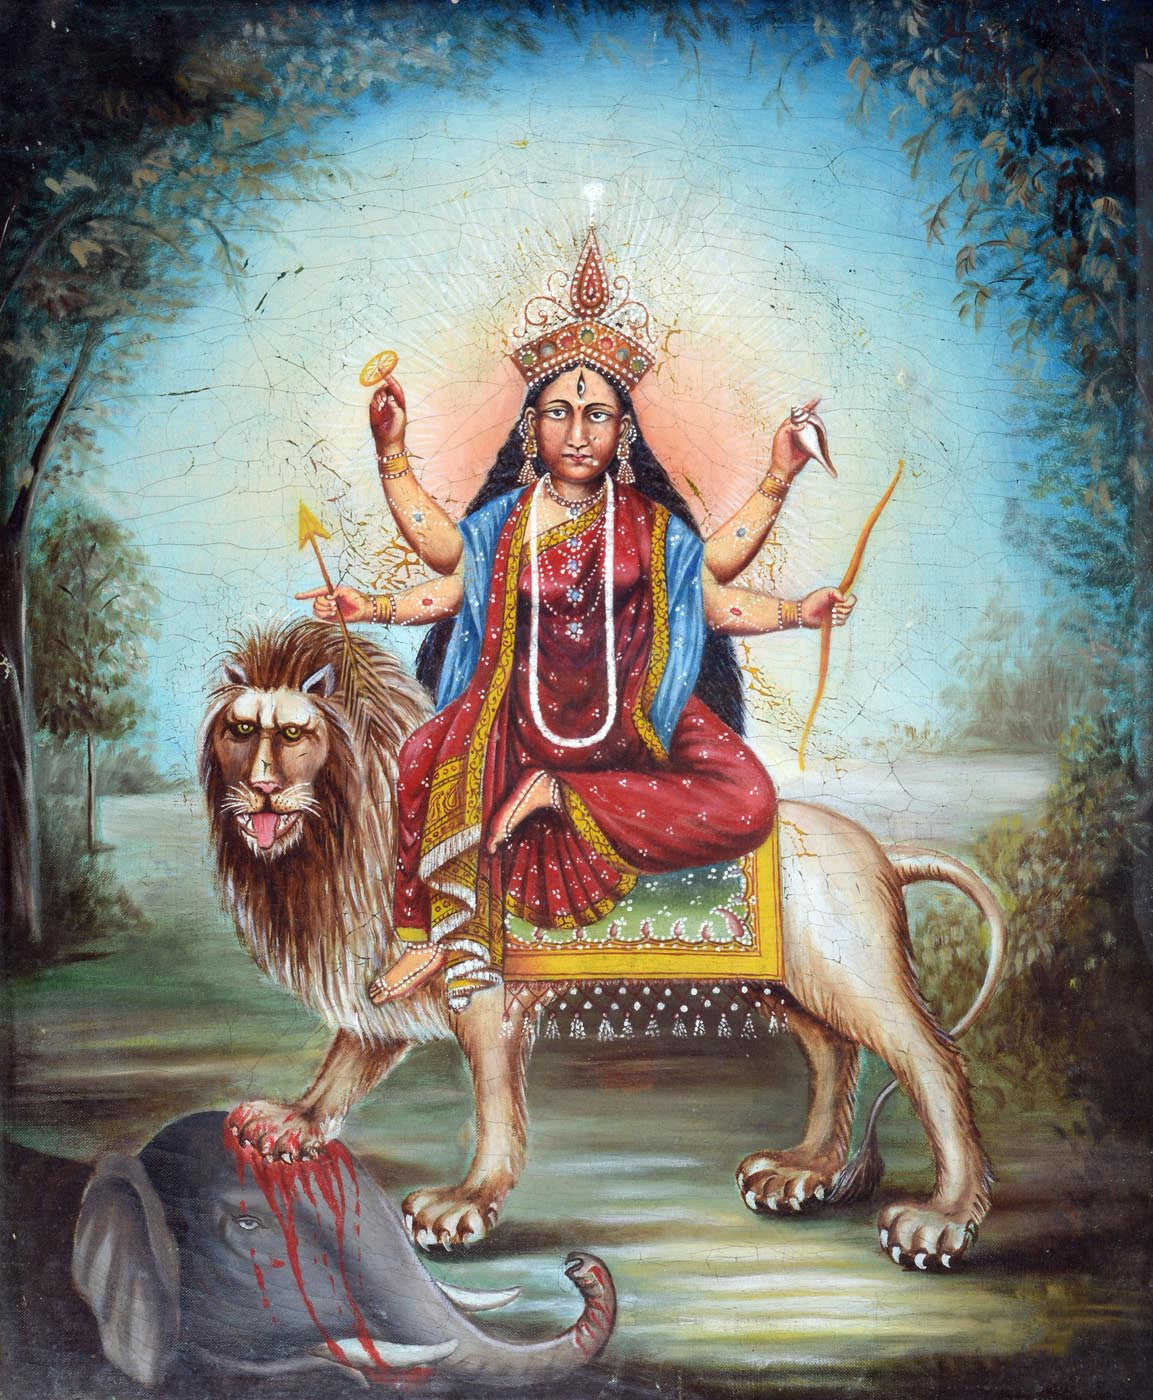 Maa Durga Painting - Art Prints by Mahesh | Buy Posters, Frames ...